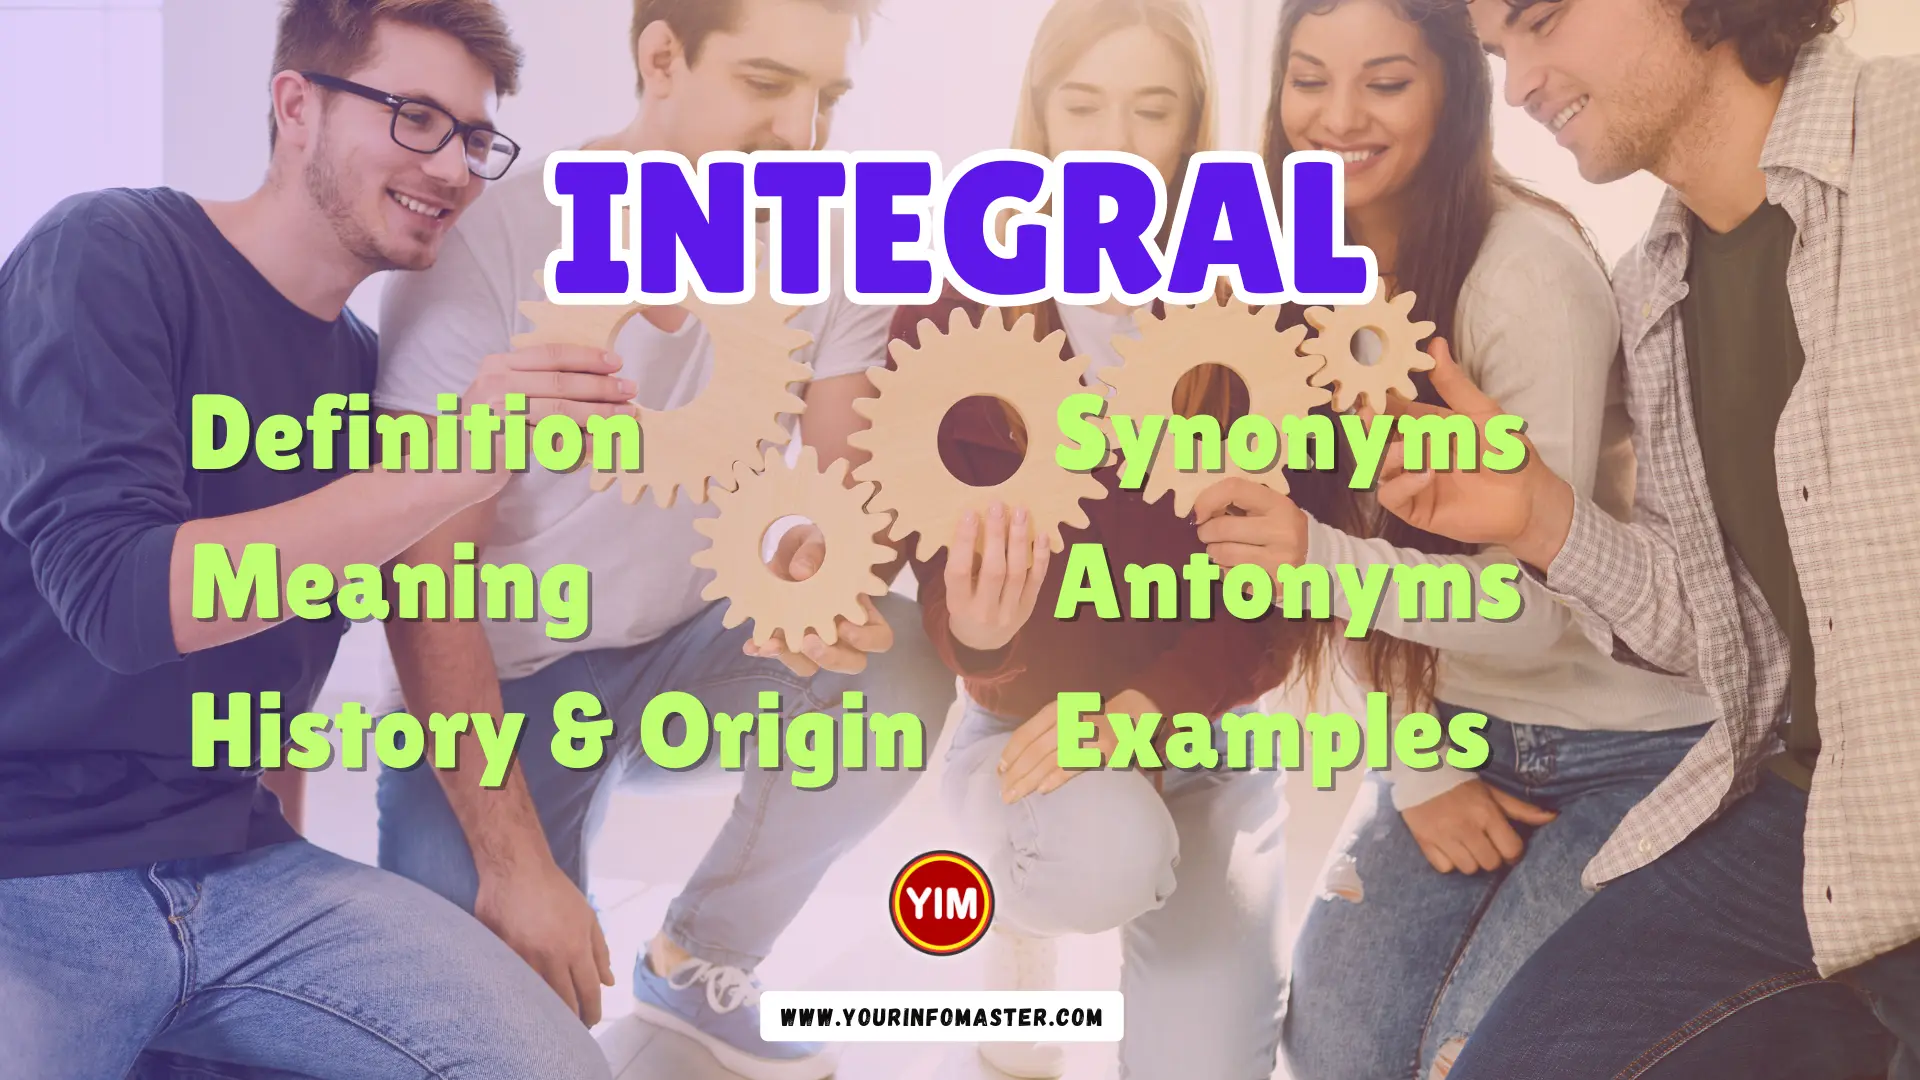 Integral Synonyms, Antonyms, Example Sentences